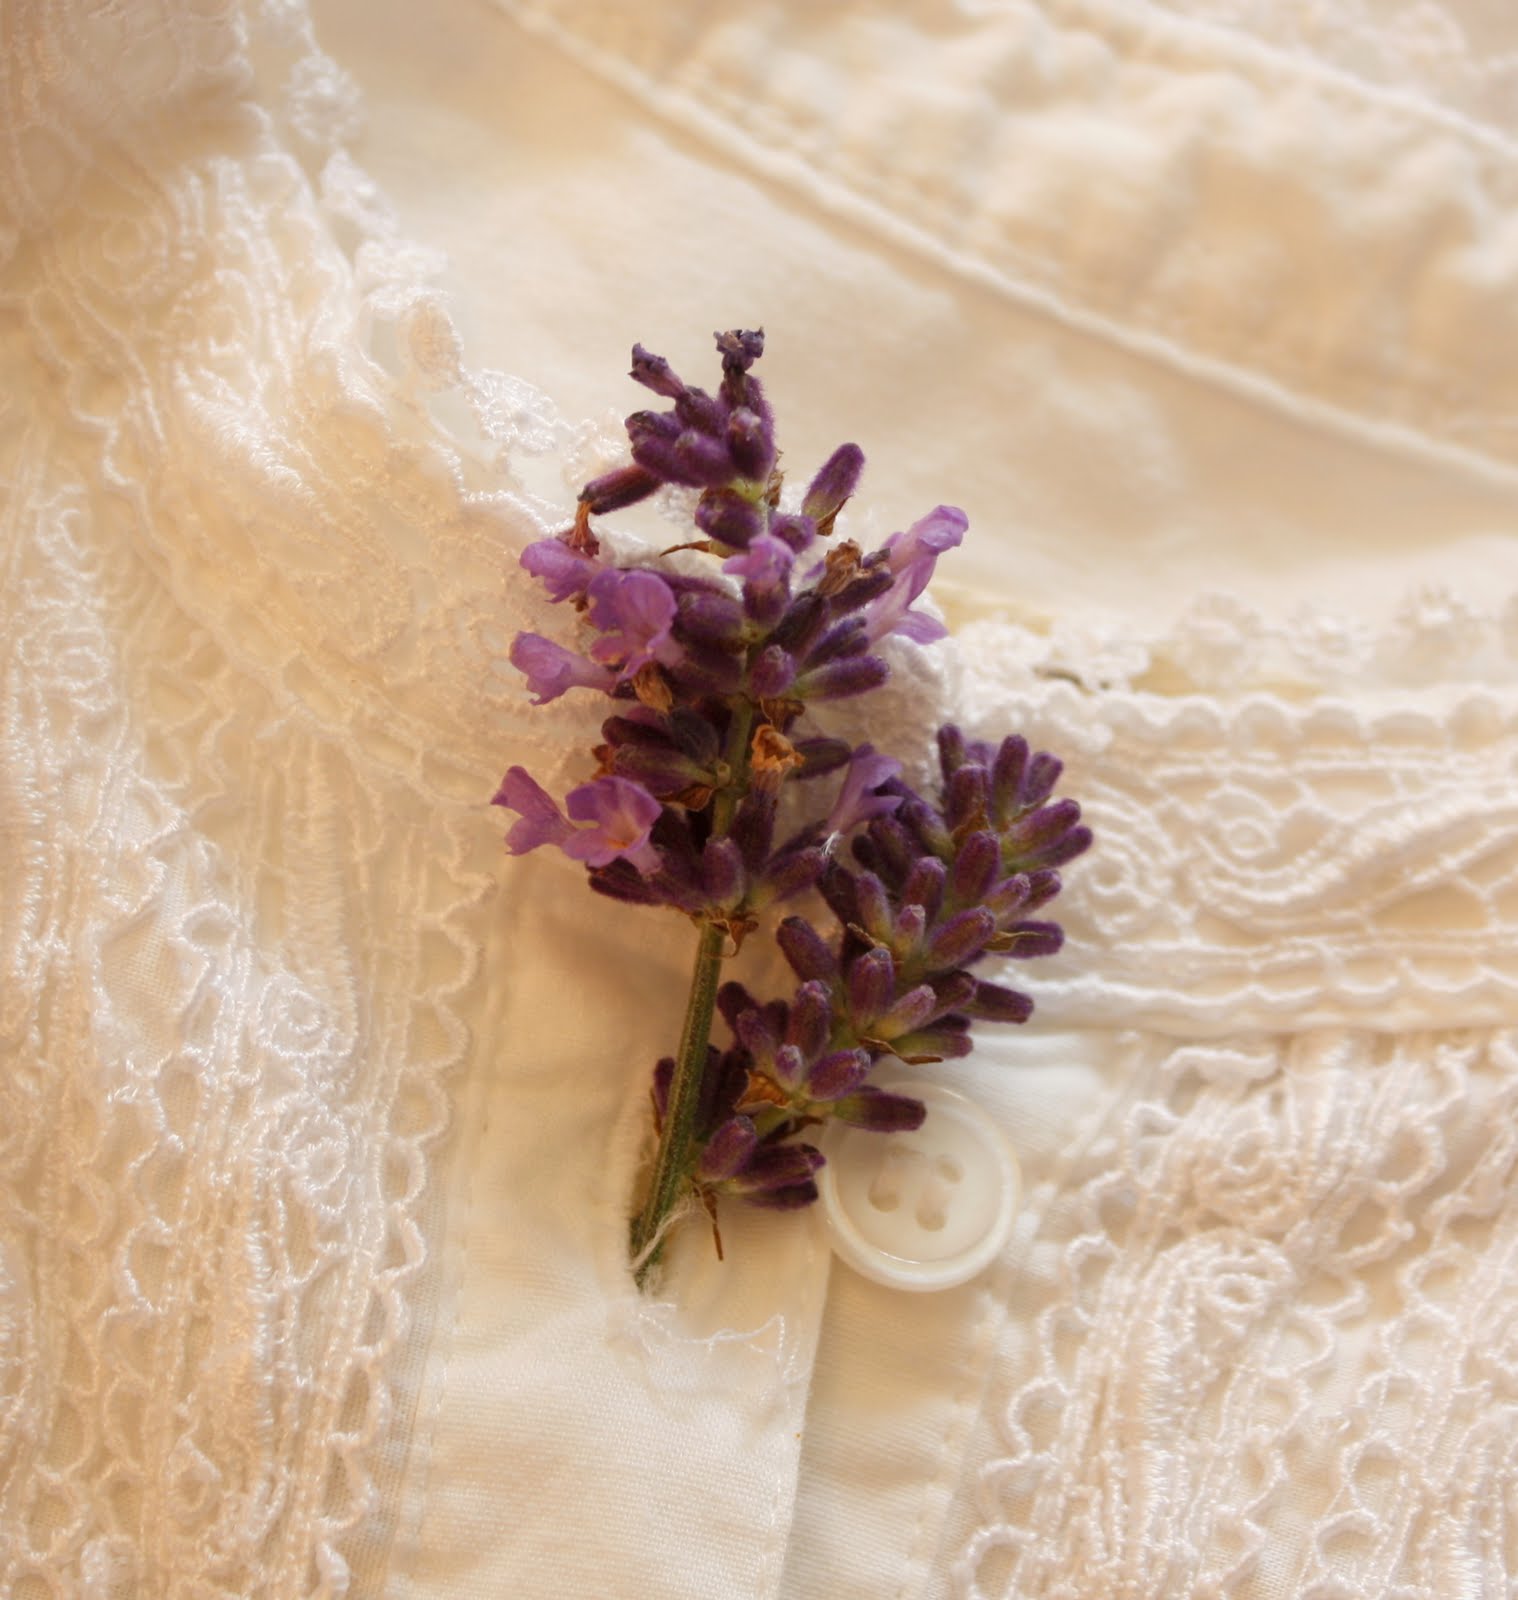 http://4.bp.blogspot.com/-OtABX0azgGU/TicXvIE_VQI/AAAAAAAAF7M/GCO01k_r18s/s1600/nightgowns+and+lavender+1.jpg